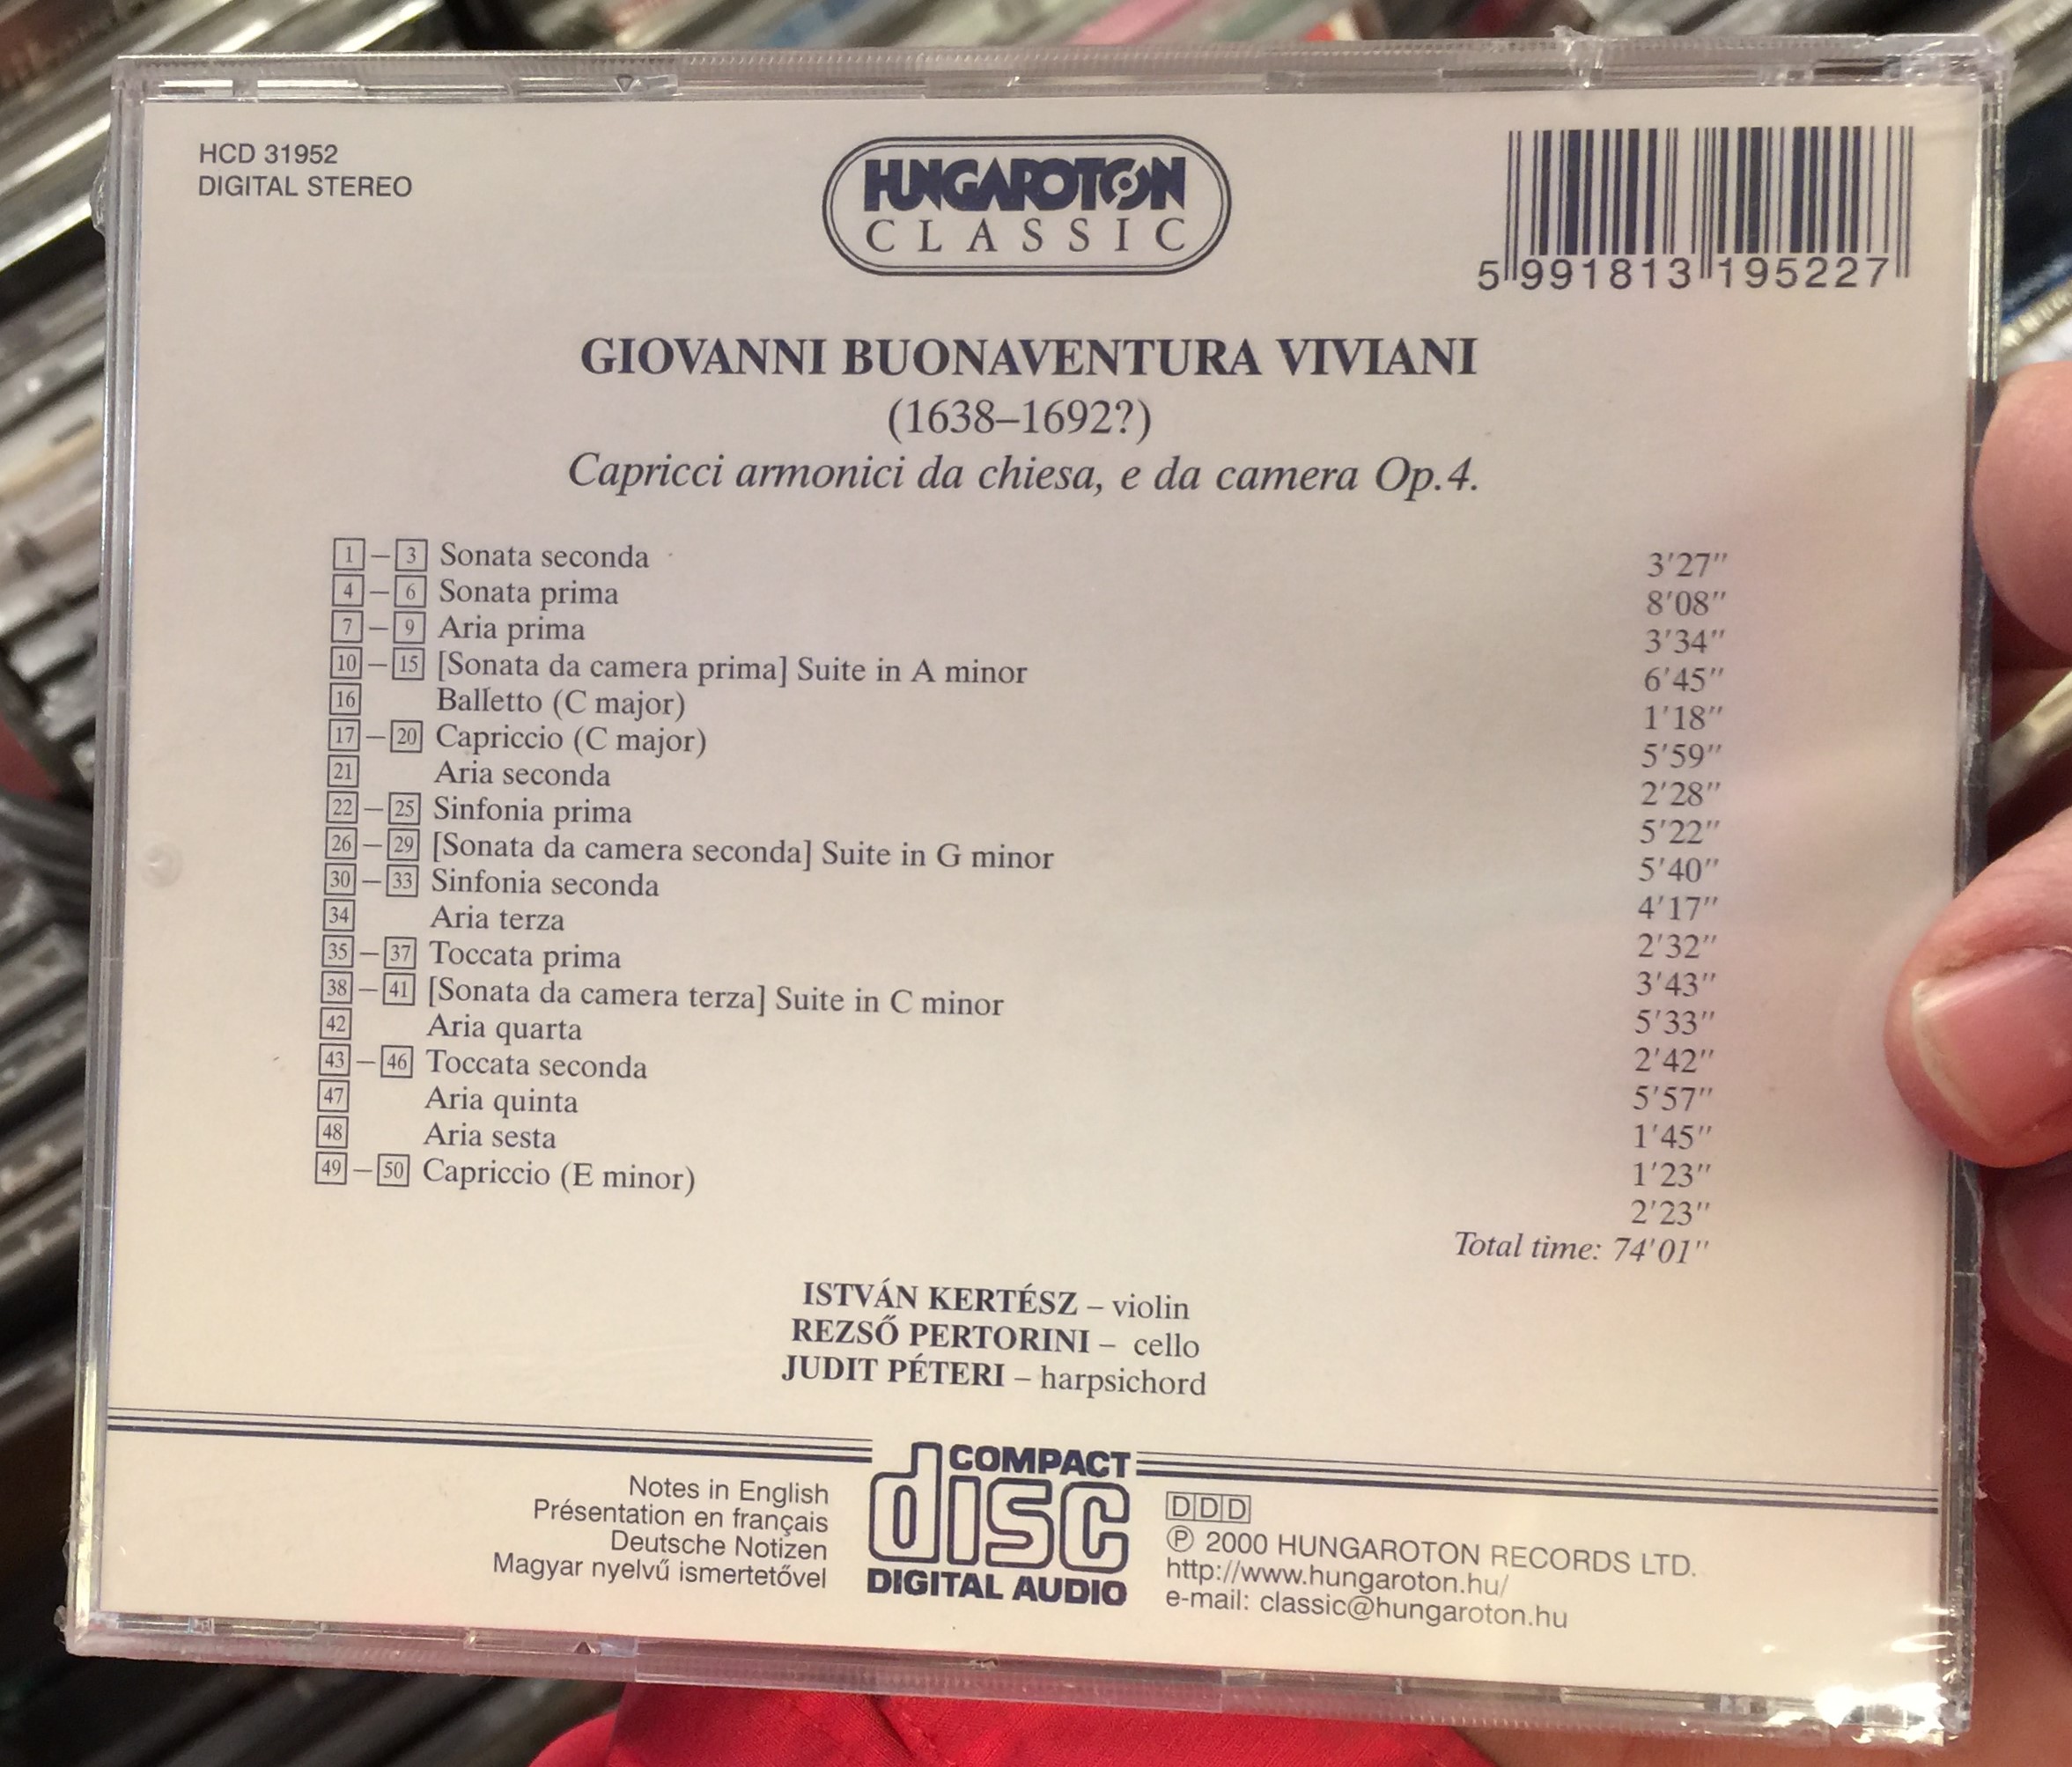 viviani-capricci-armonici-da-chiesa-e-da-camera-op.-4-istvan-kertesz-violin-rezso-pertorini-cello-judit-peteri-harpsichord-hungaroton-classic-audio-cd-2000-stereo-hcd-31952-2-.jpg